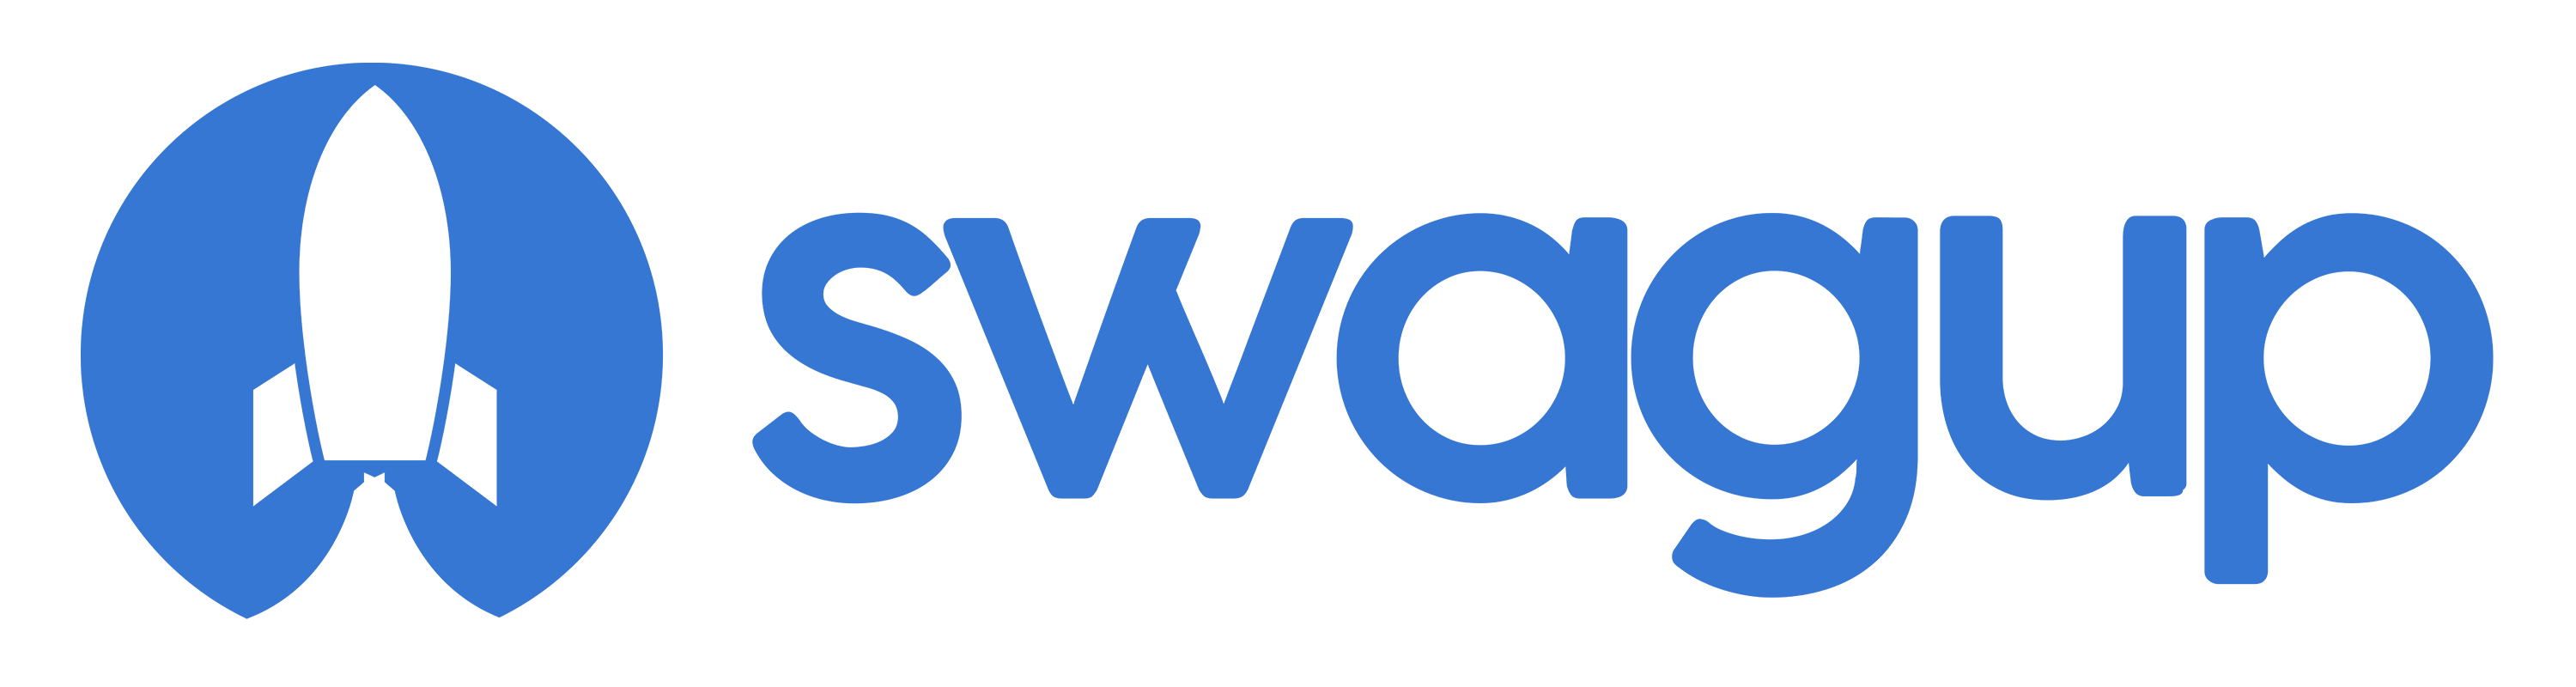 Swagup logo